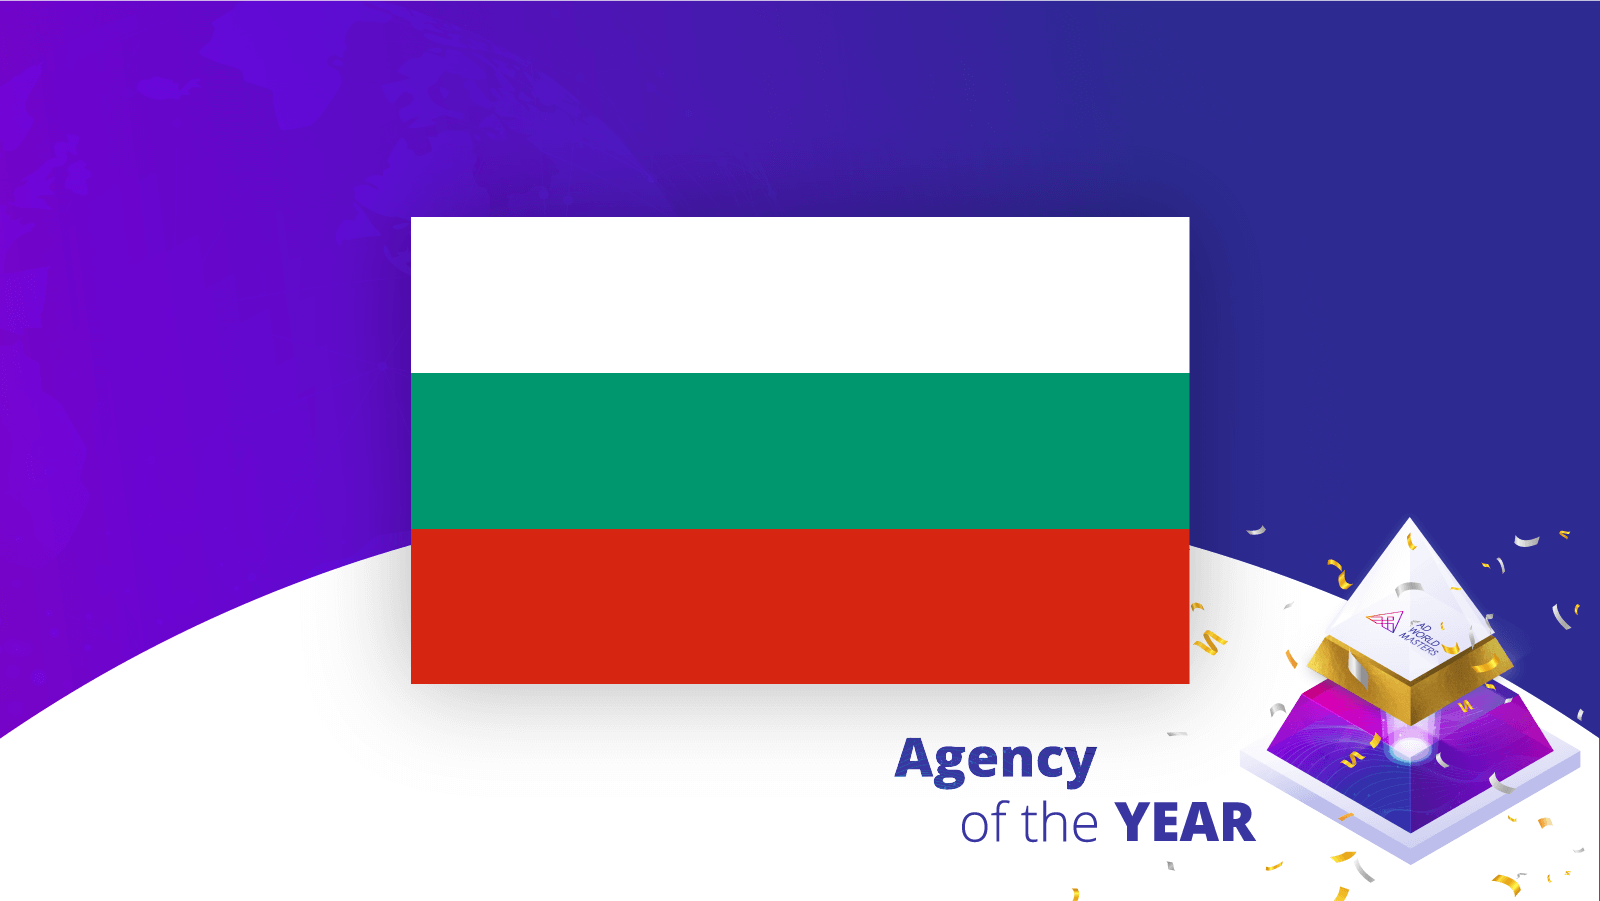 Agencies of the Year Bulgaria